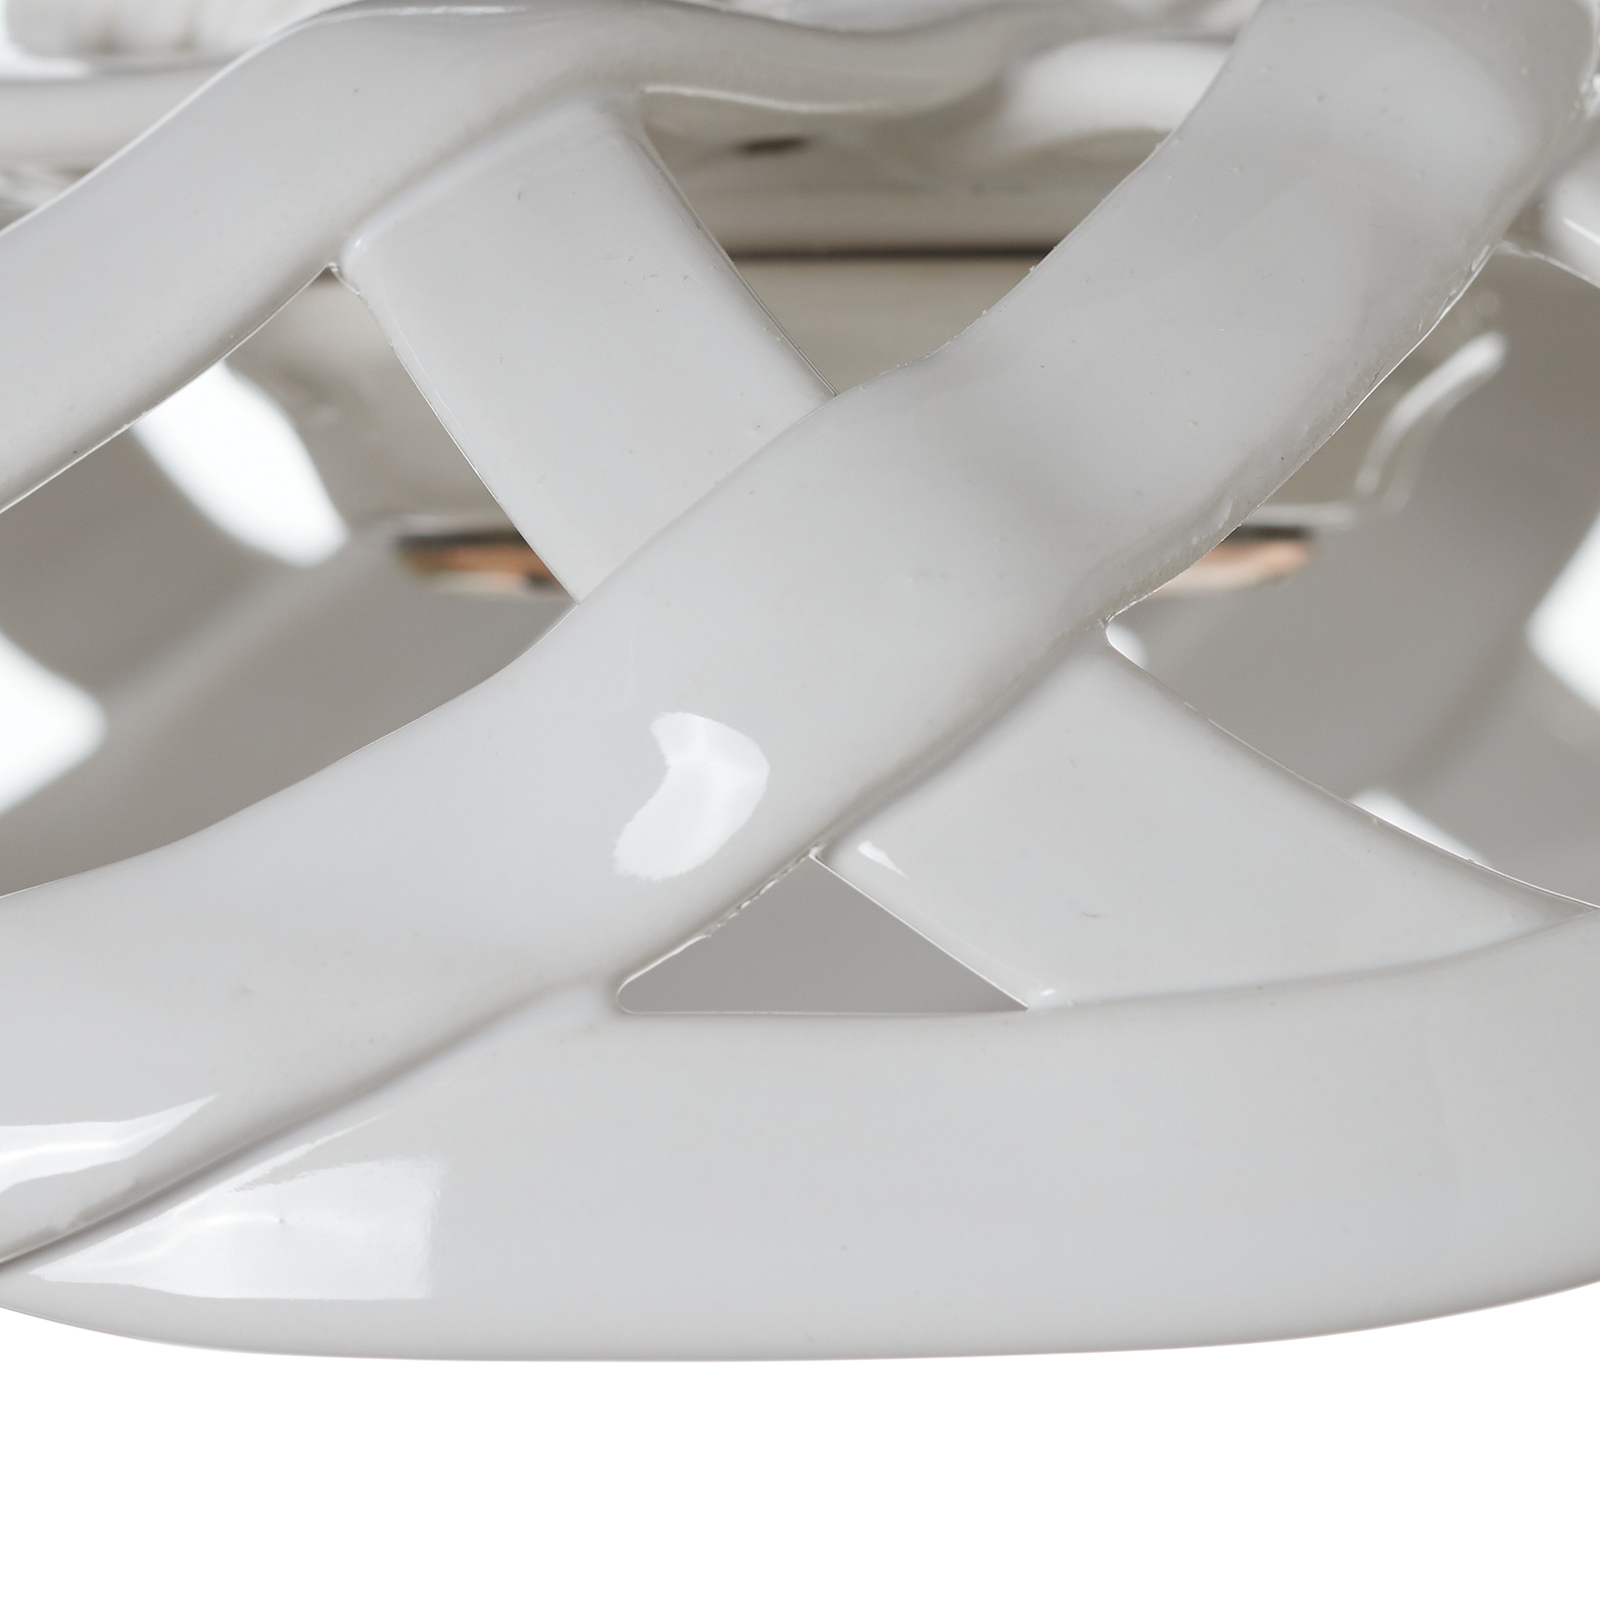 Emanuel ceiling light, ceramic, 3-bulb